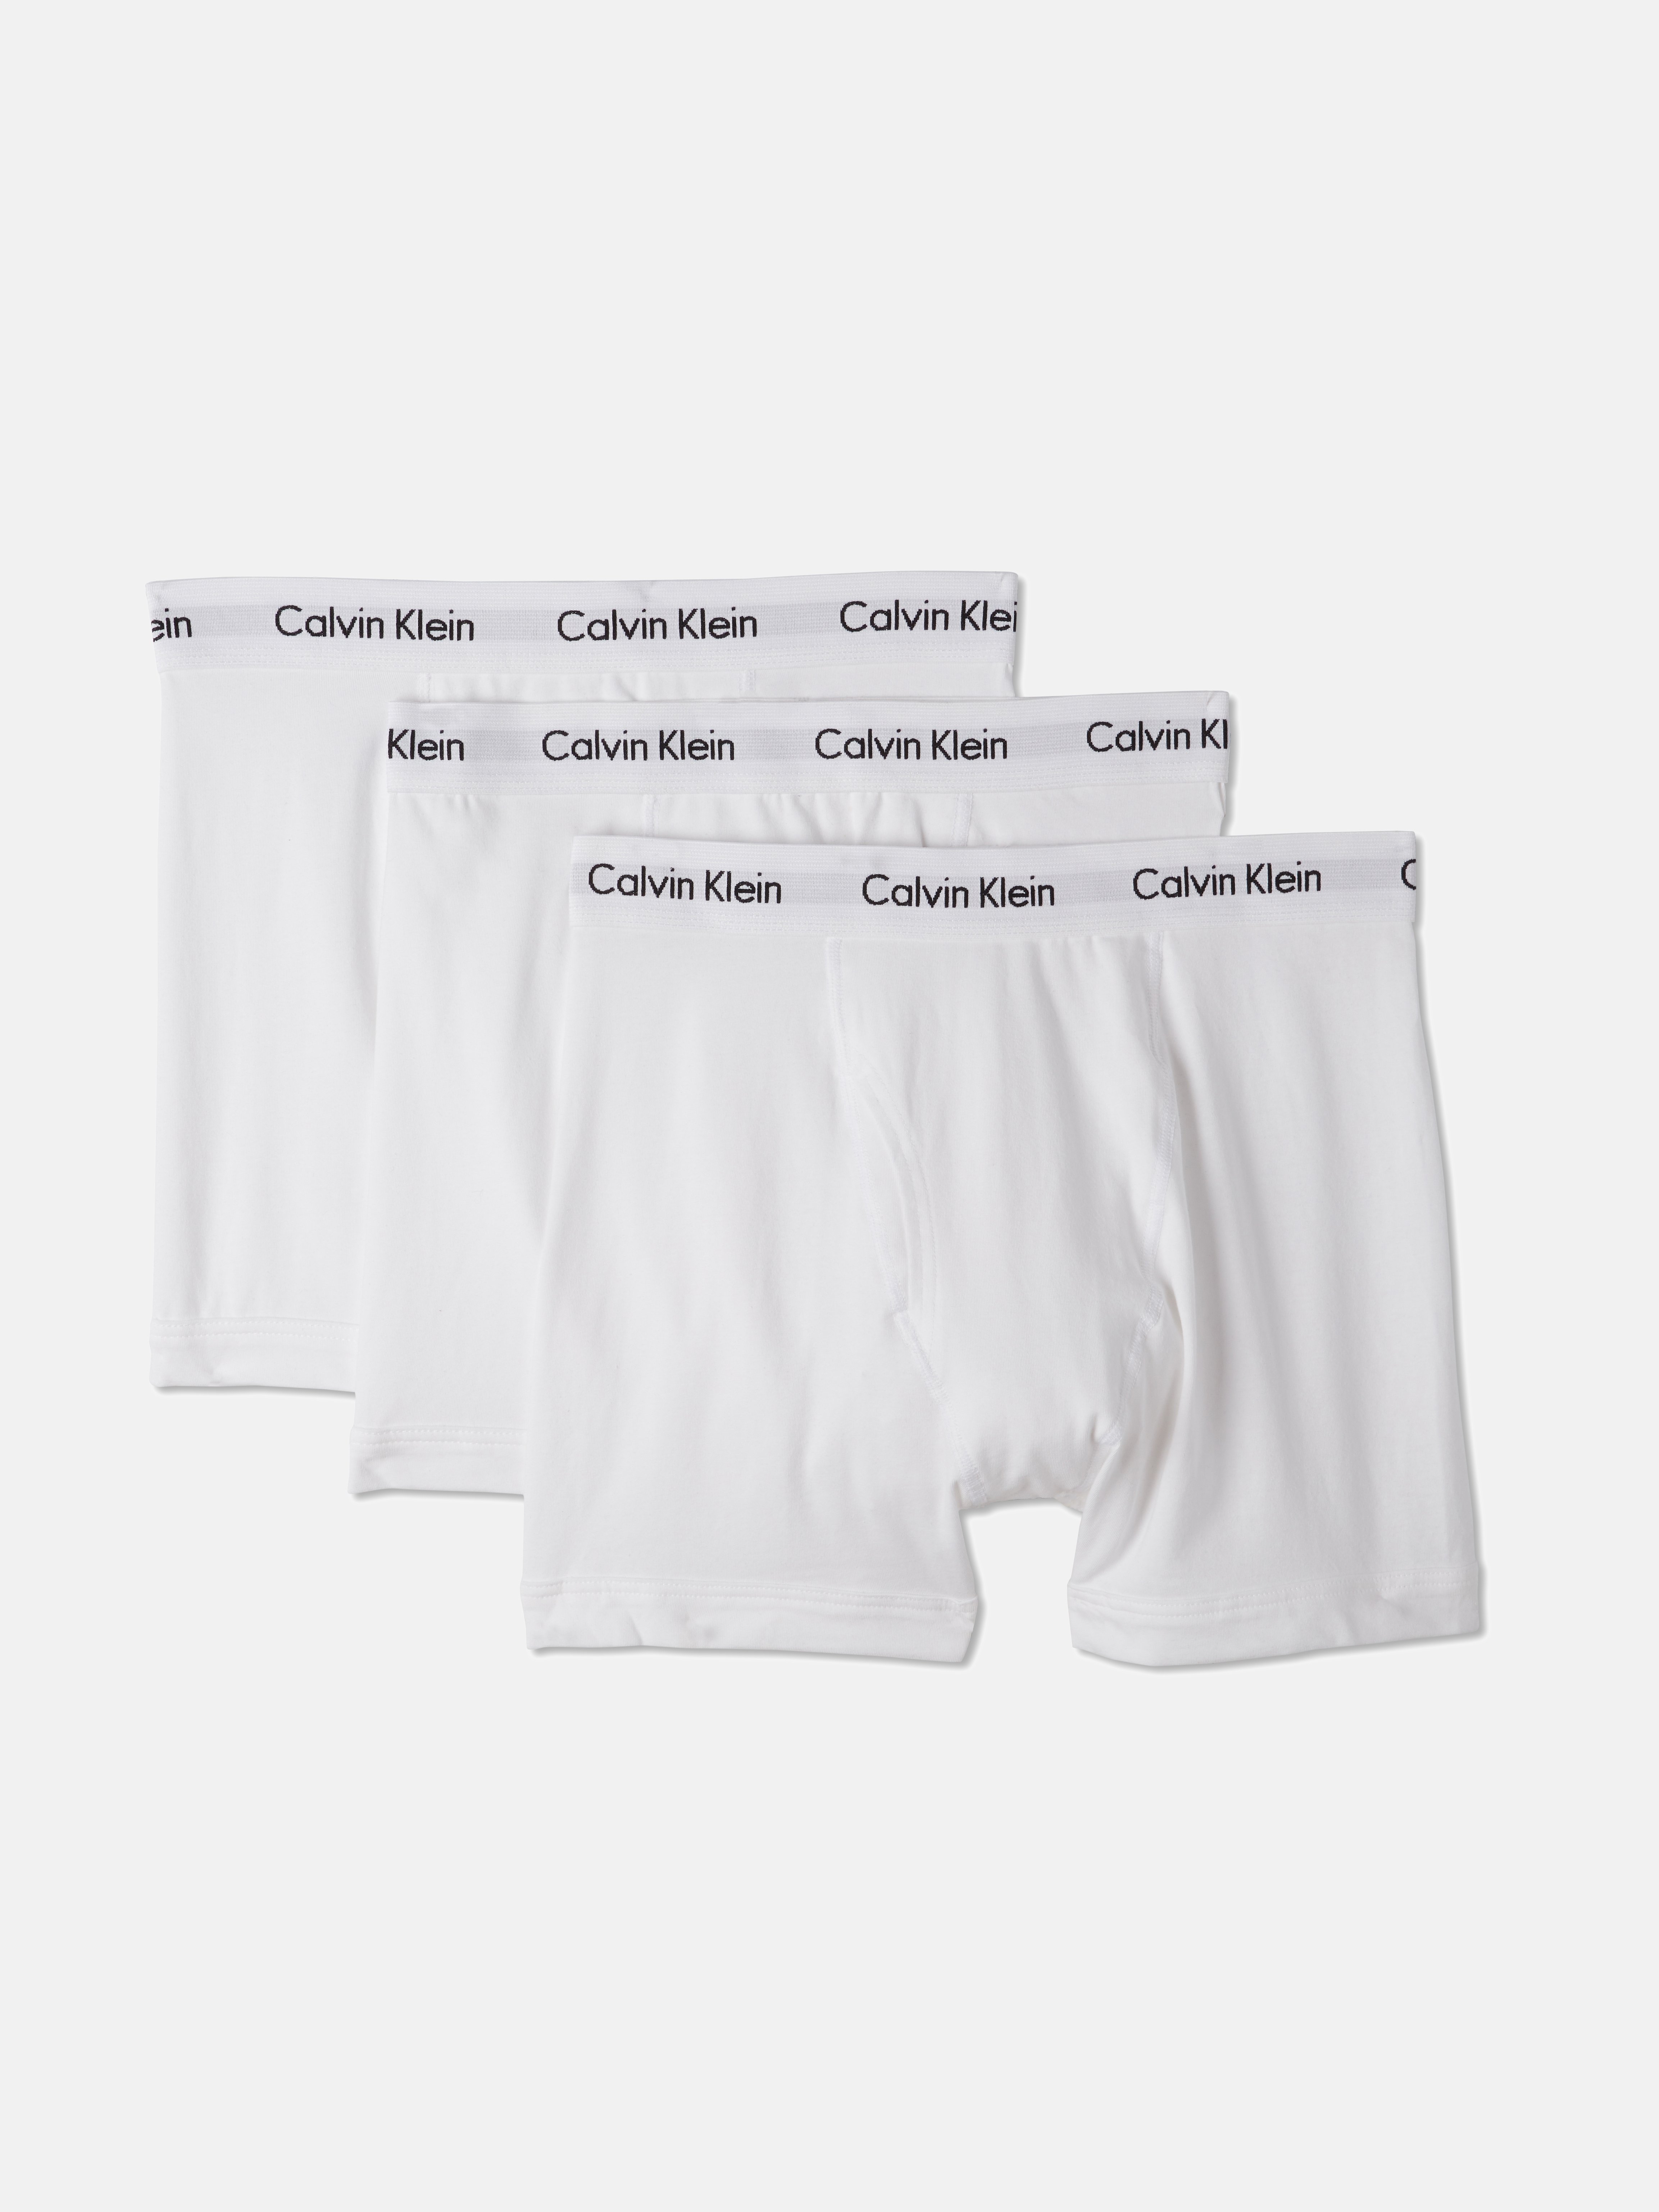 calvin klein boxers size guide